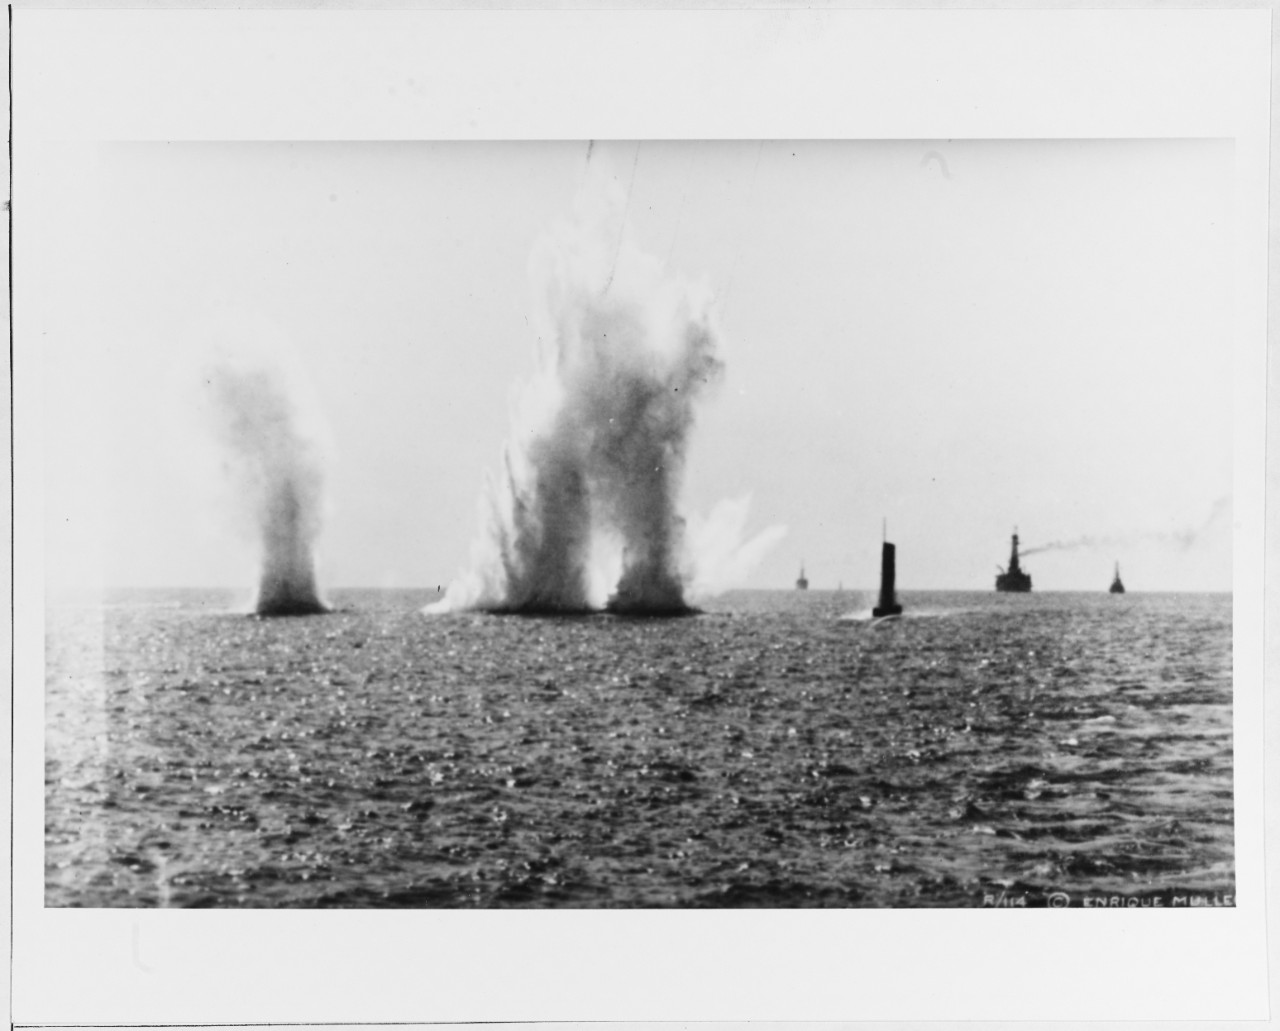 Battleship Division Practice. Target Practice in 1914.